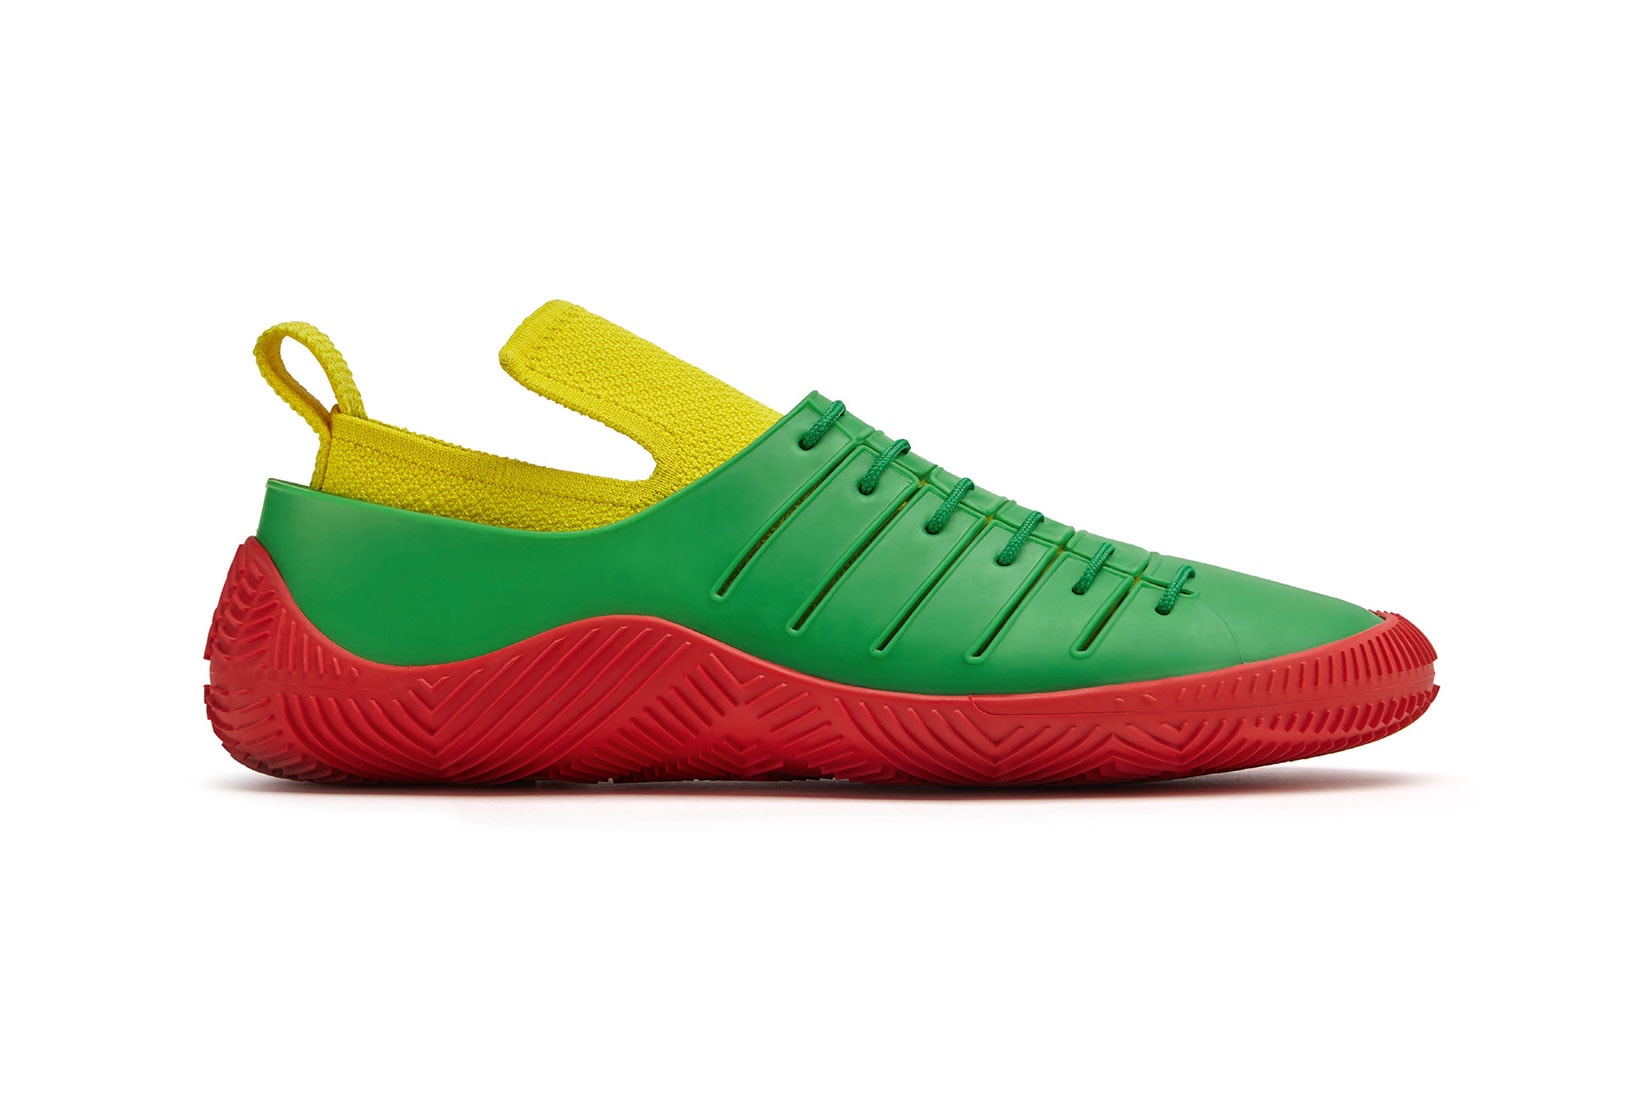 bottega veneta salon 01 footwear collection daniel lee barefoot second skin red yellow green